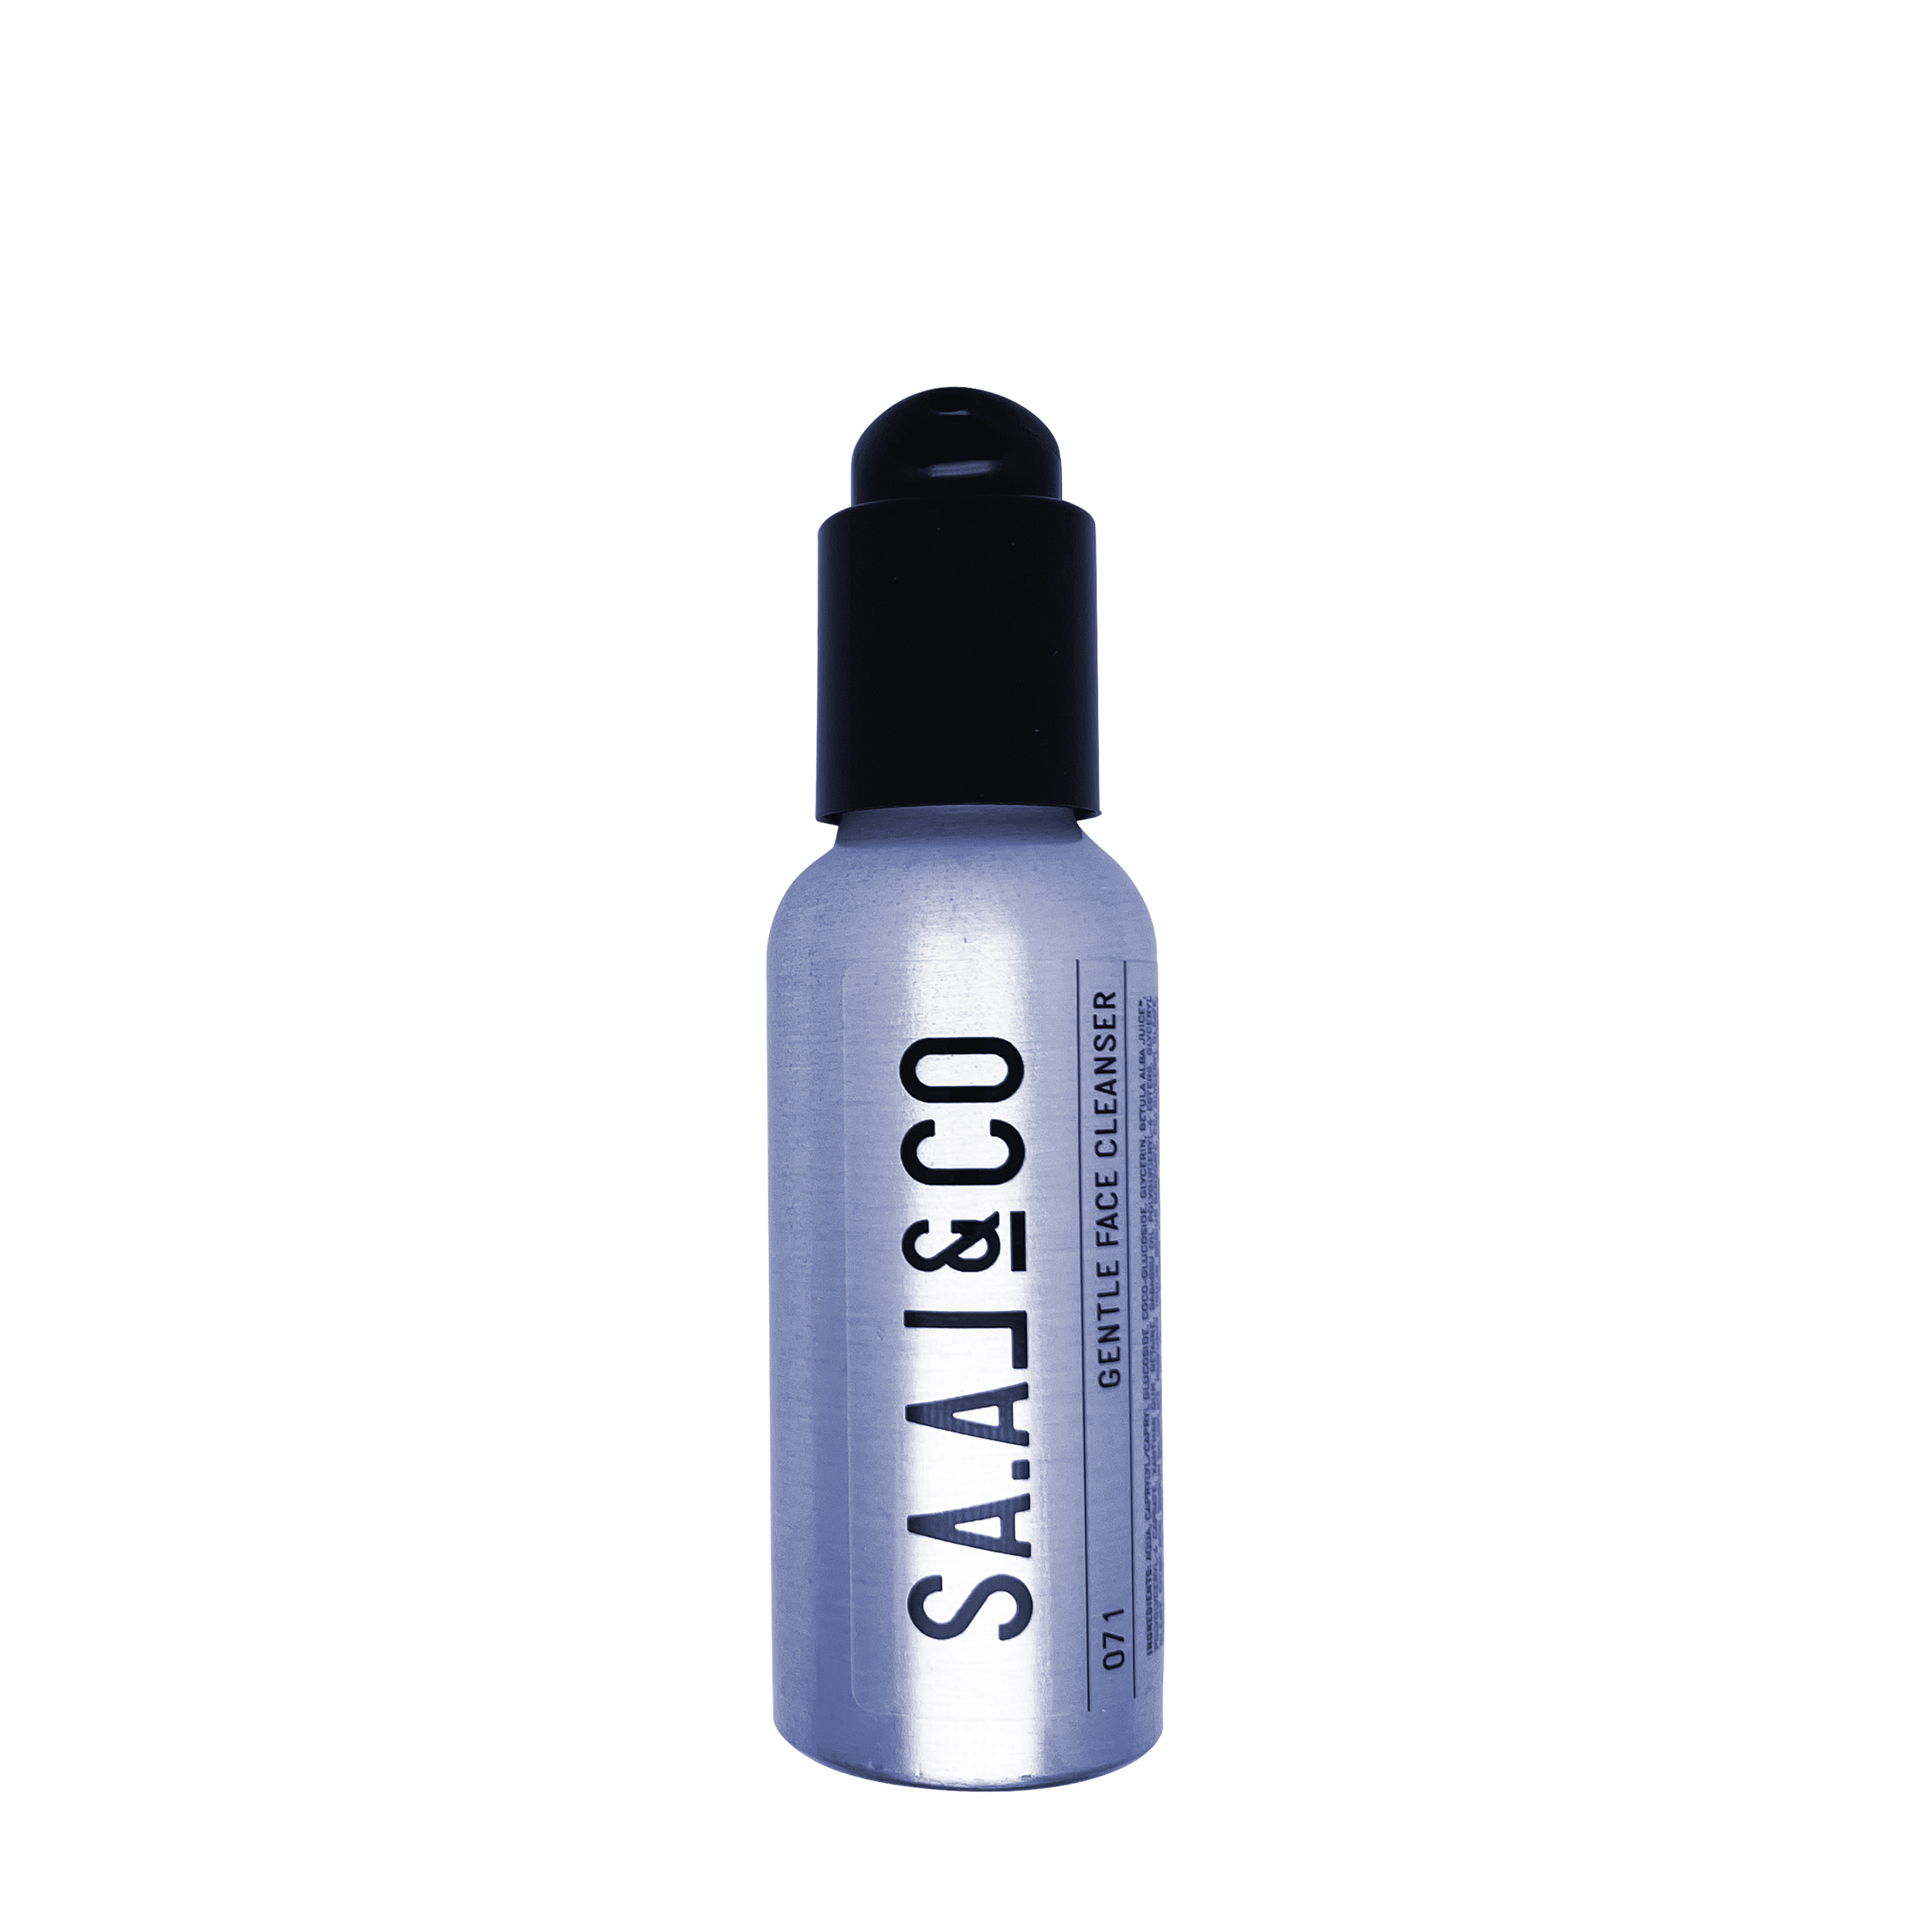 SA.AL&CO SA.AL&CO 071 Gentle Face Cleanser 100 ml - мягкое очищающее средство для лица 100 мл